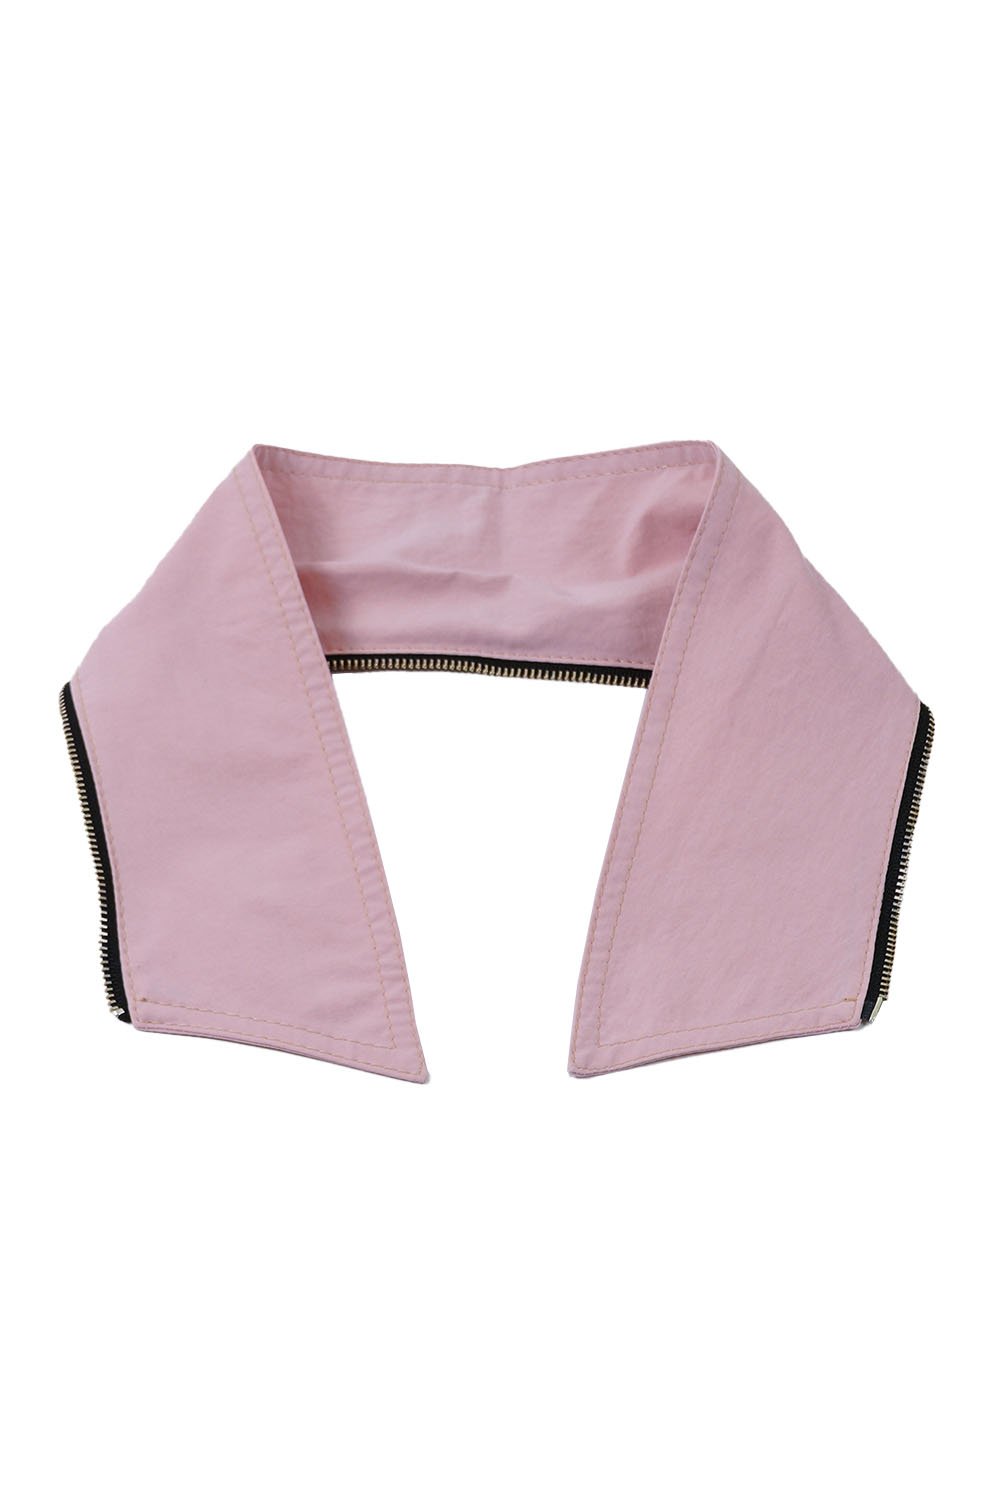 TRNCH CNSTR, Collar, Pale pink